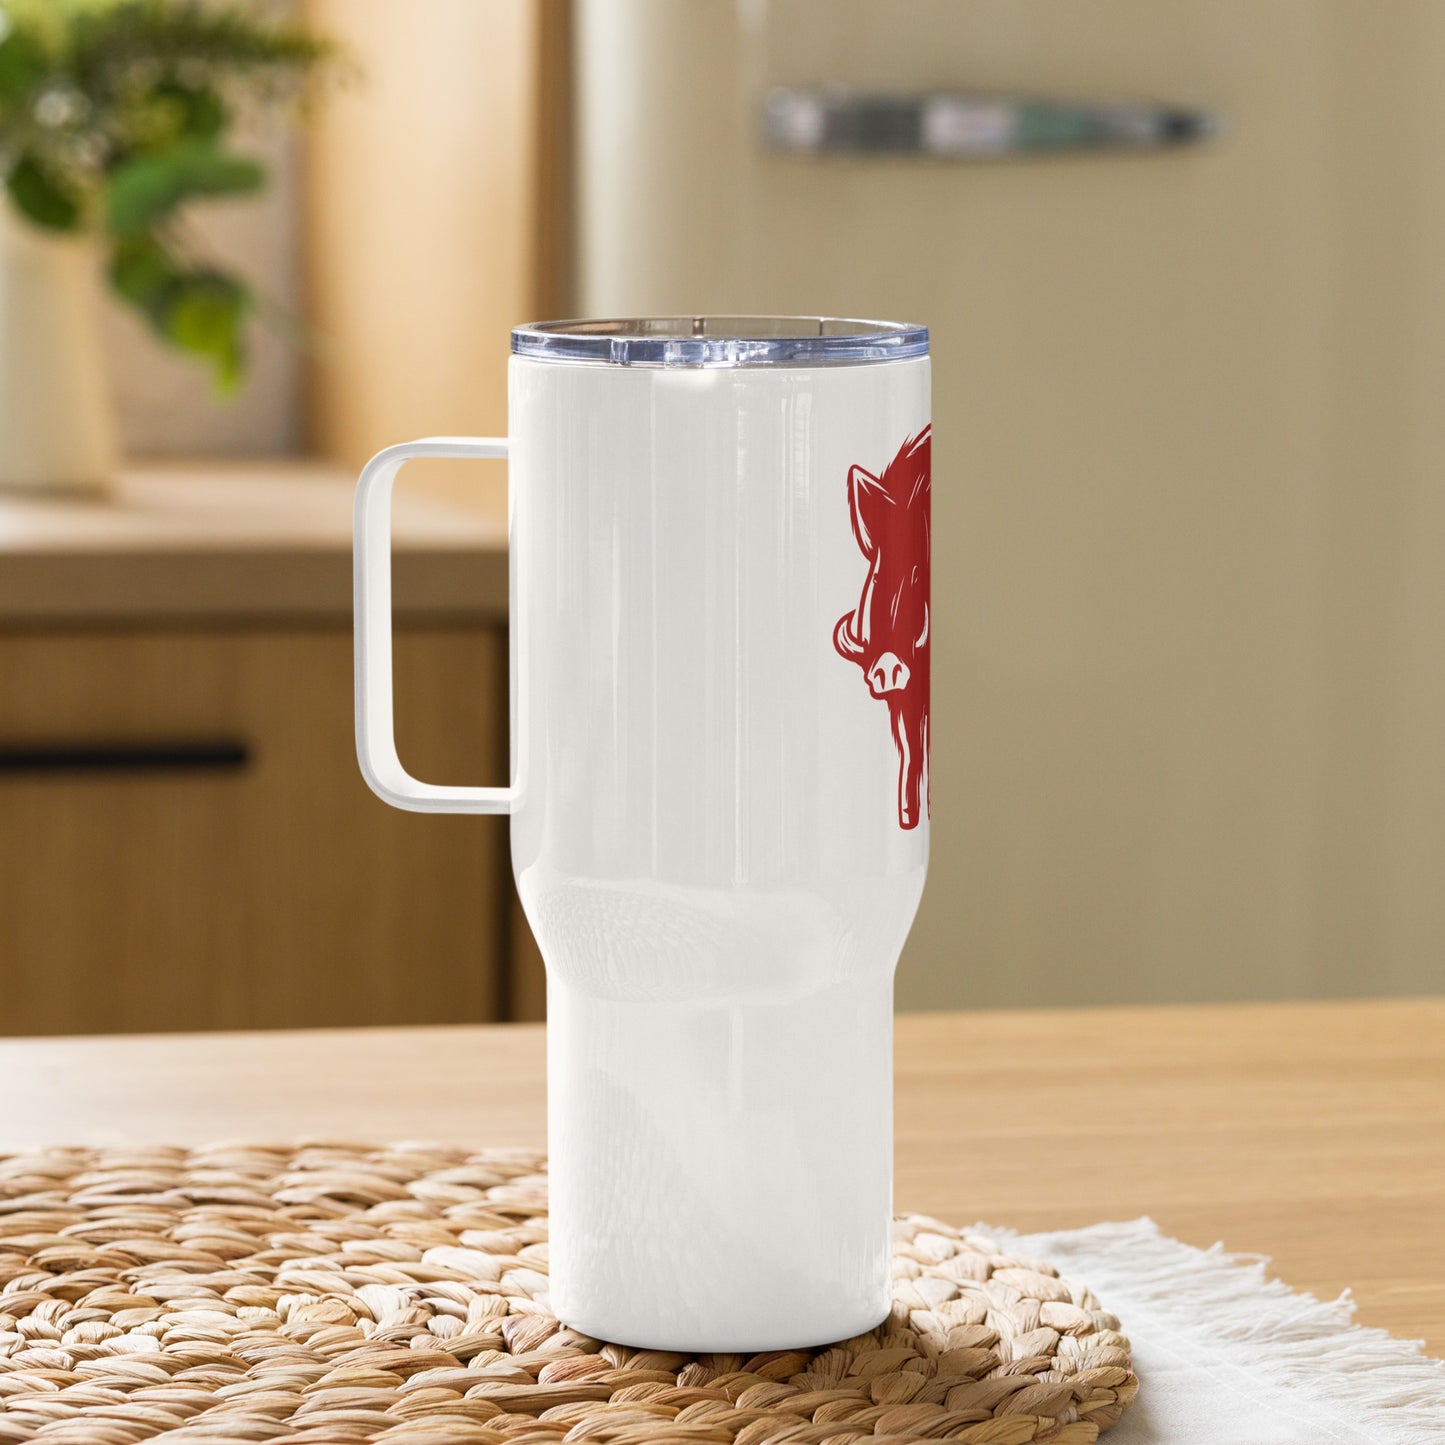 Arkansas Travel mug with a handle